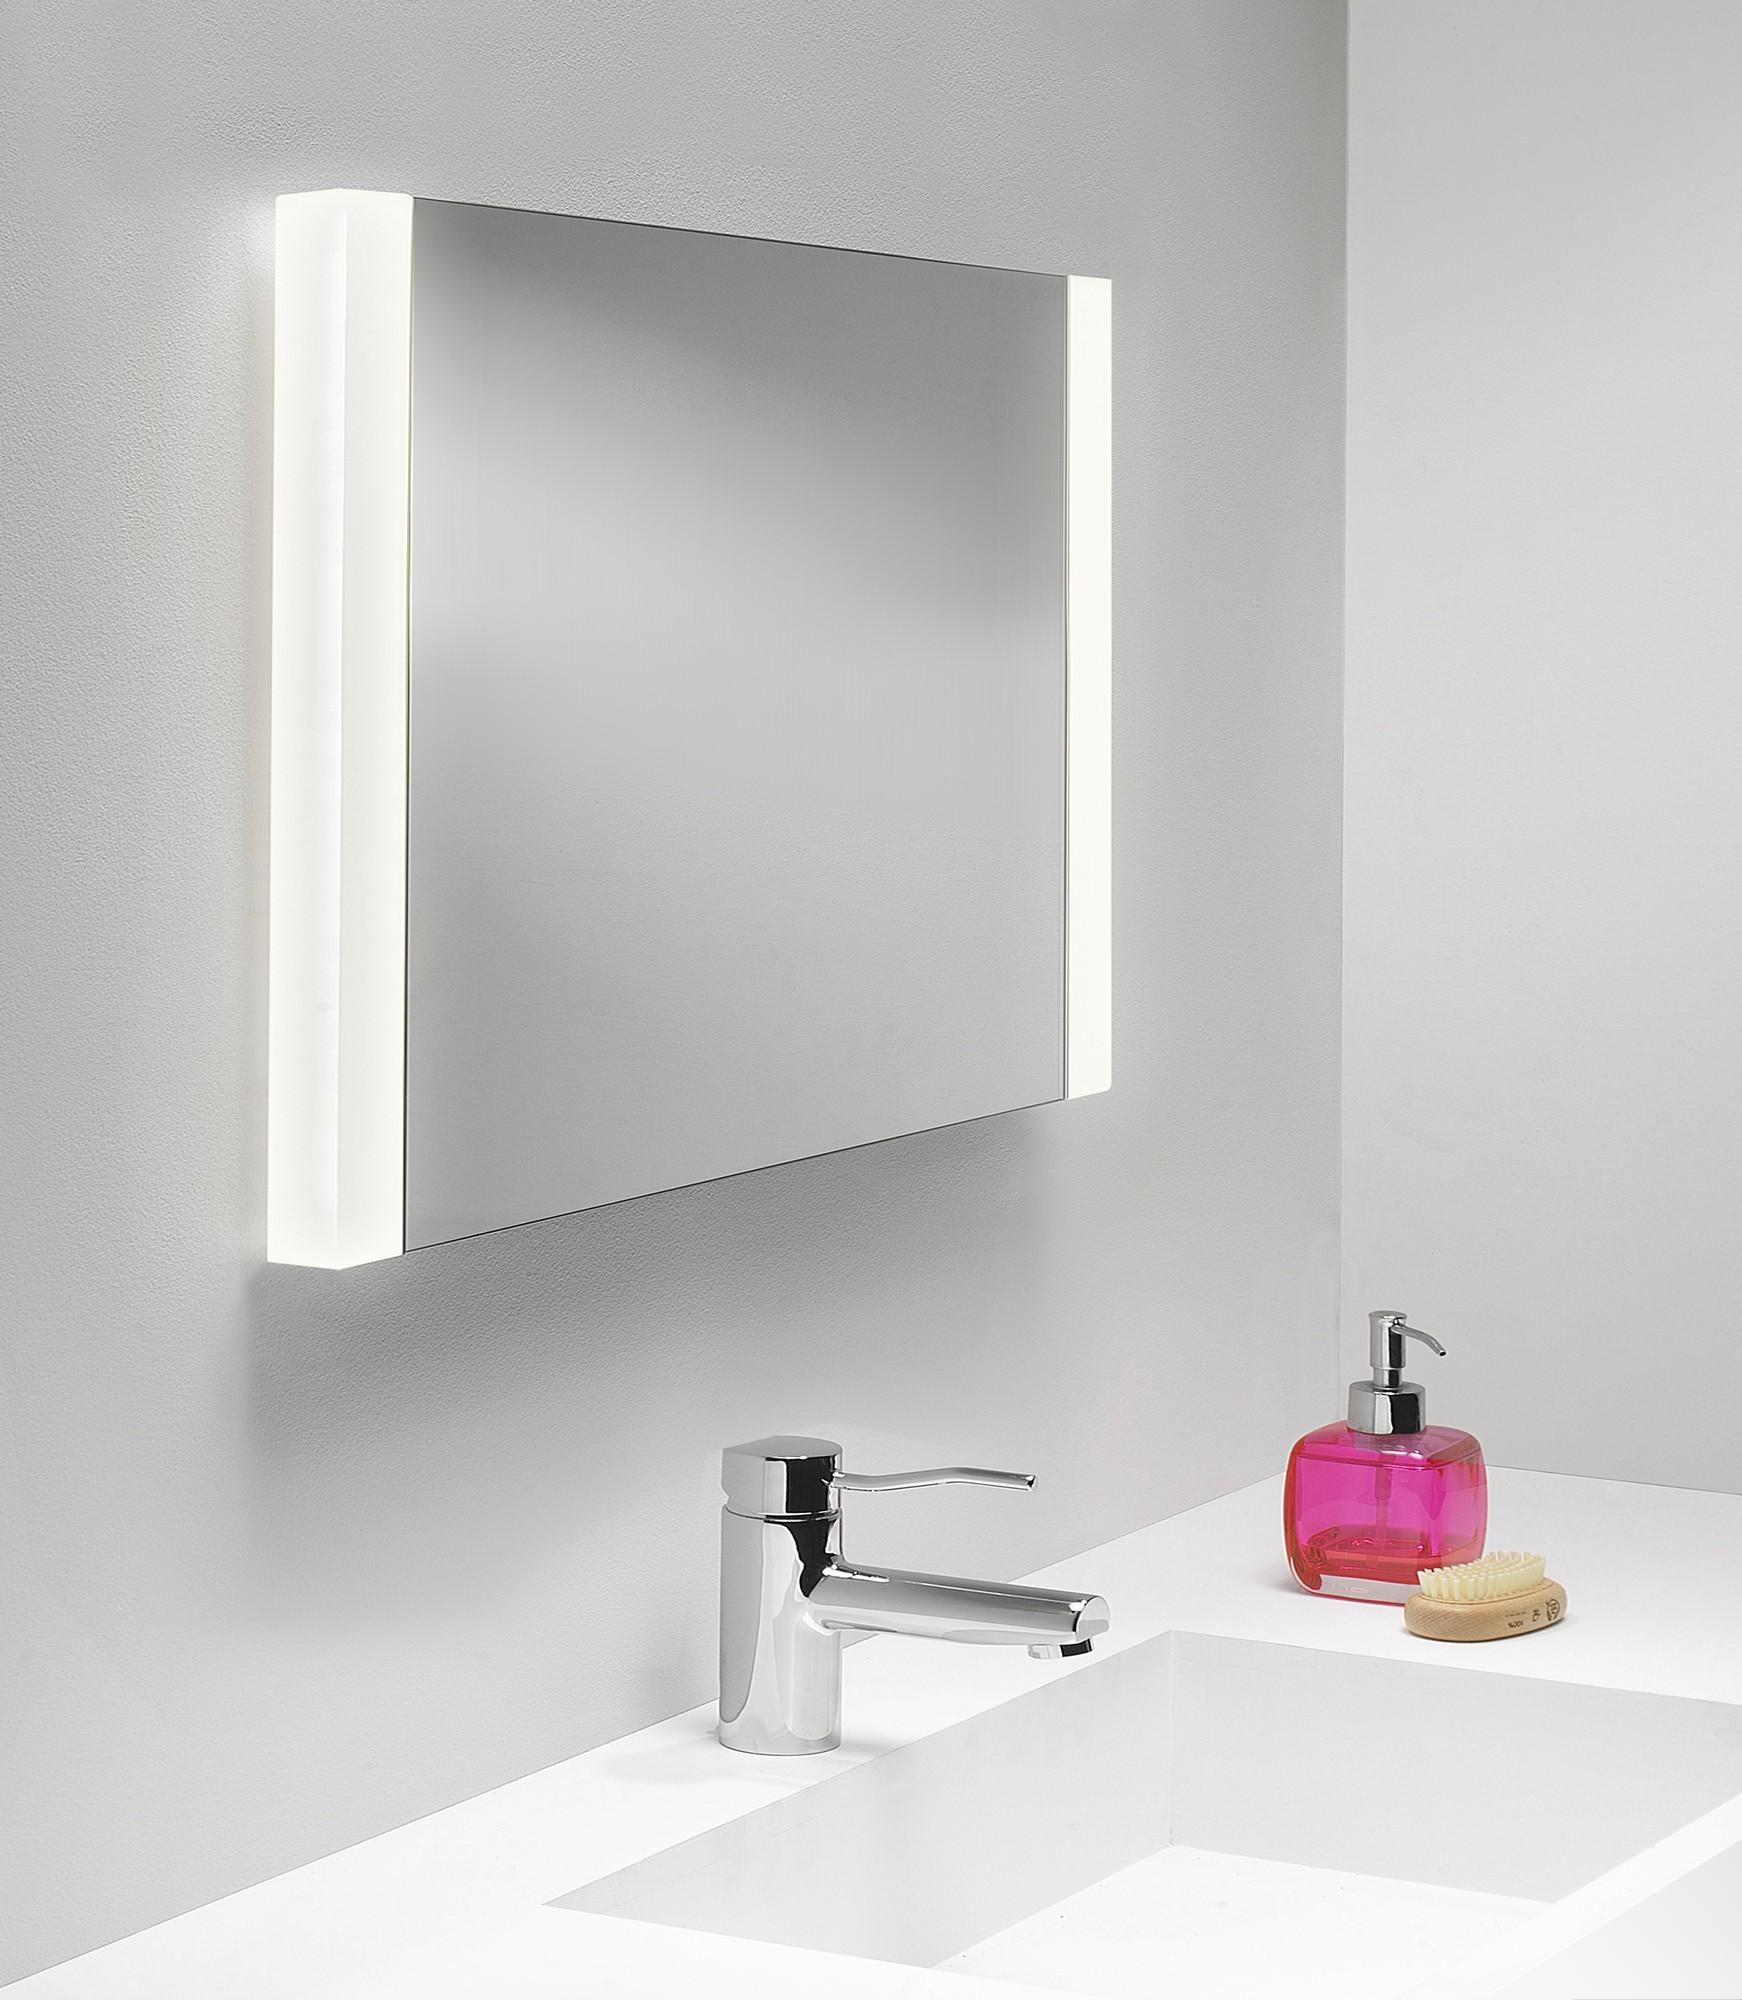 Lighted Bathroom Mirrors
 Top 20 Bathroom Mirrors Lights